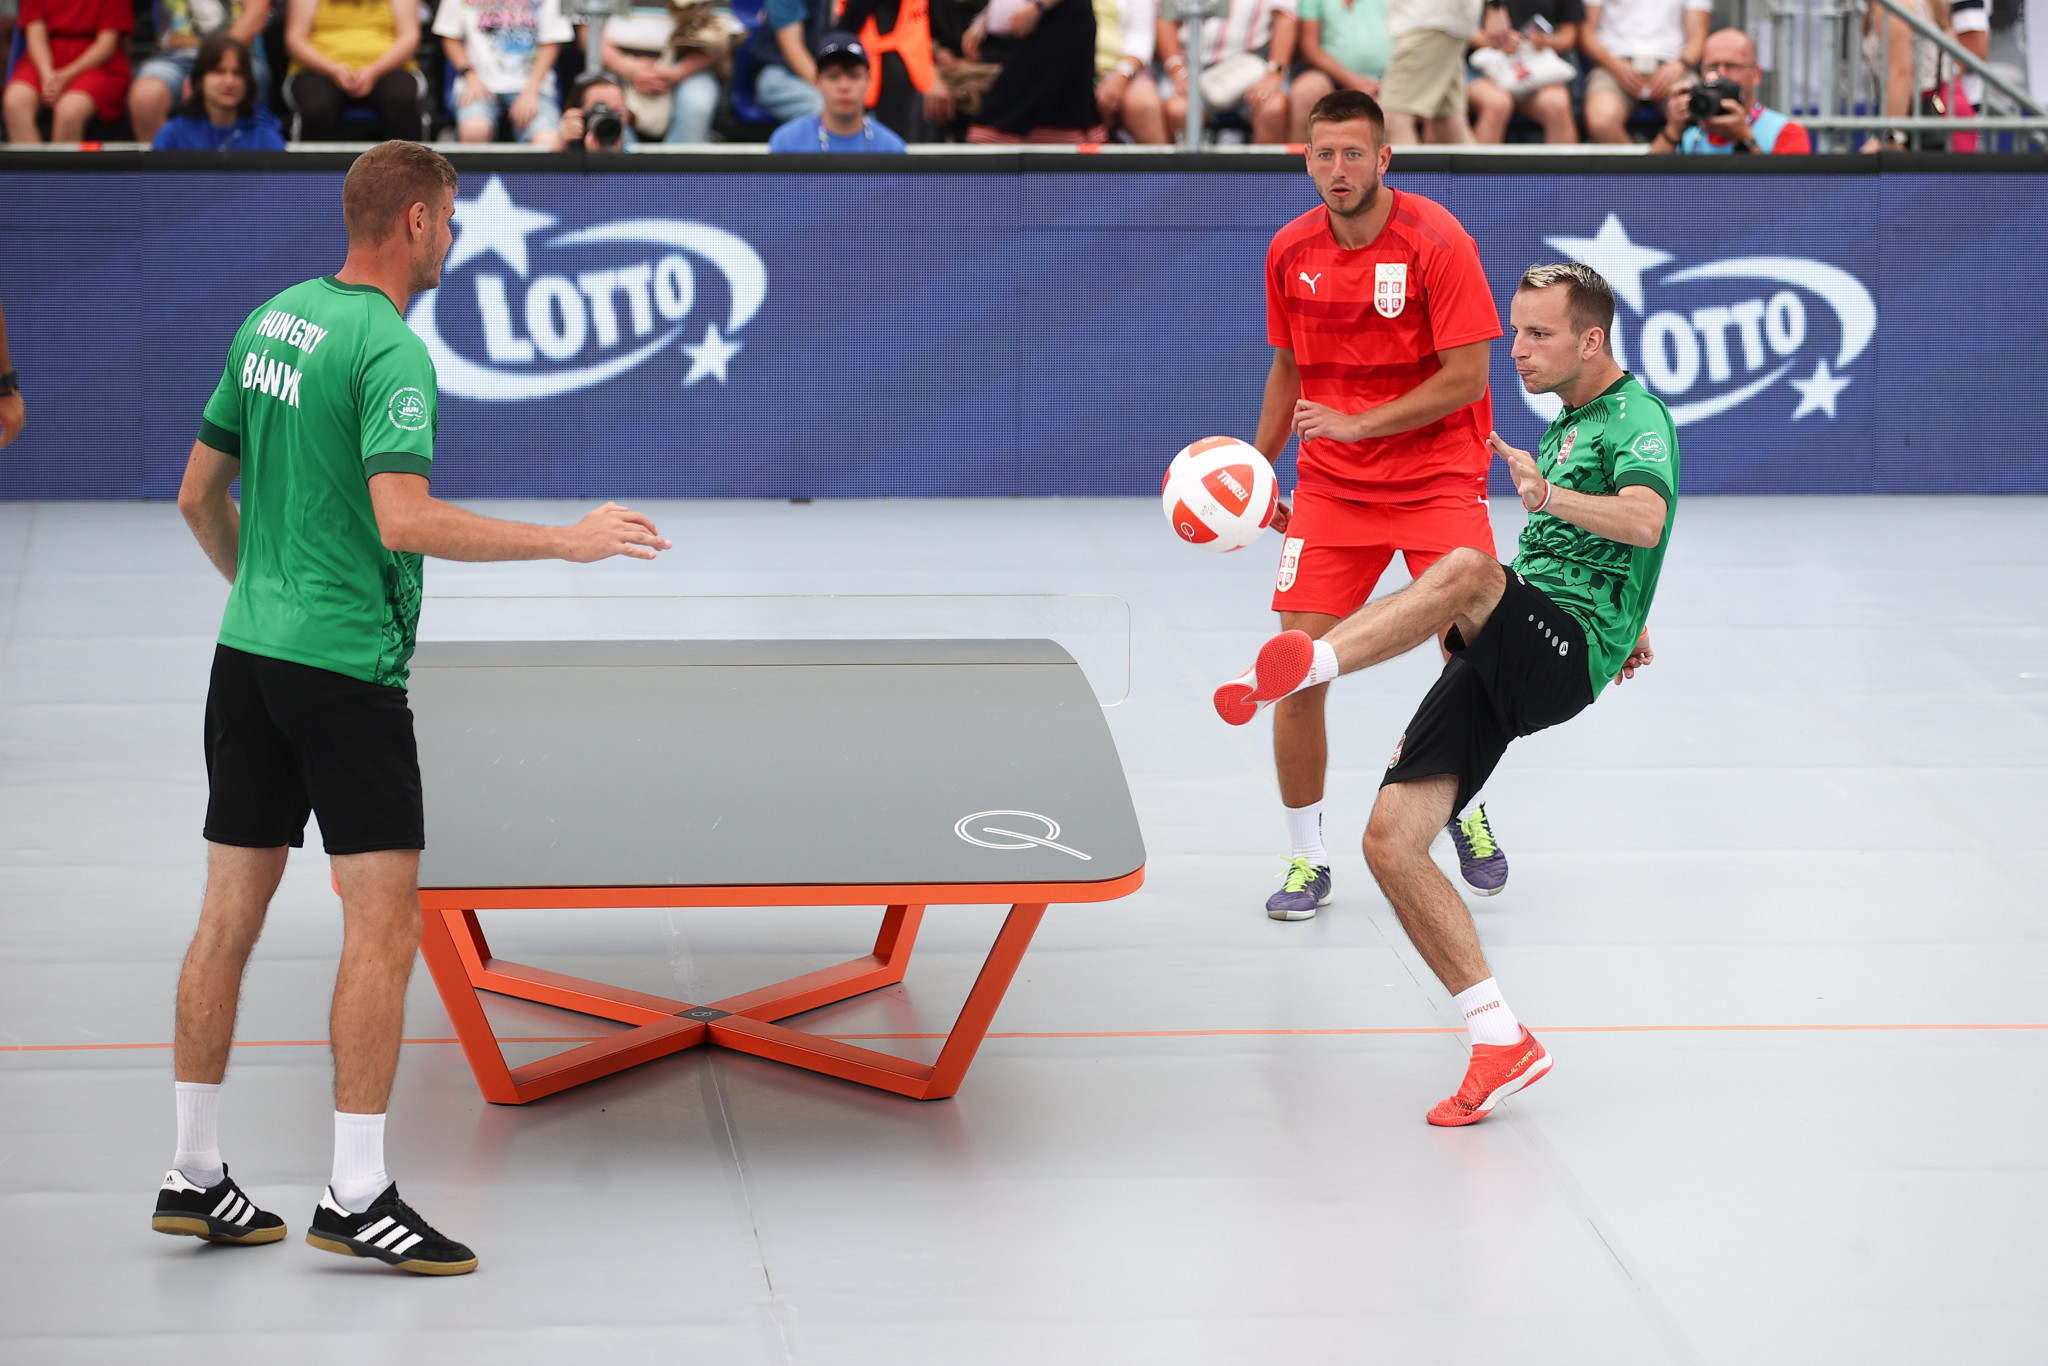 Hungary's Csaba Banyik, left, and Balázs Katz, right, won the postponed men's doubles teqball final against world champions Bogdan Marojević and Nikola Mitro of Serbia ©Kraków-Małopolska 2023